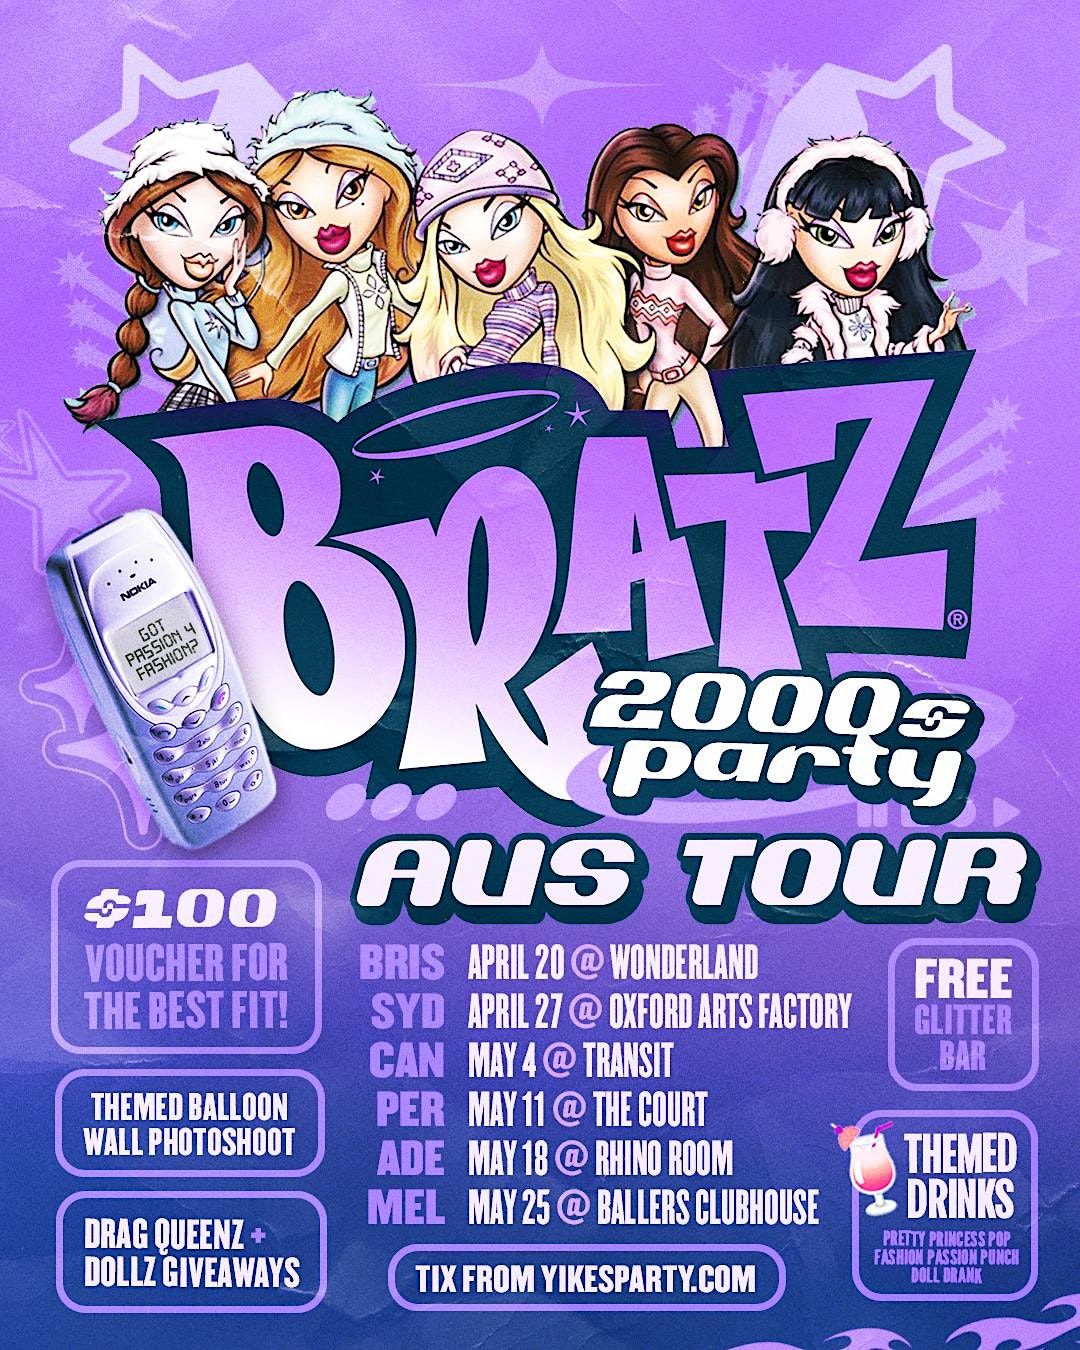 BRATZ 2000s Party Adelaide